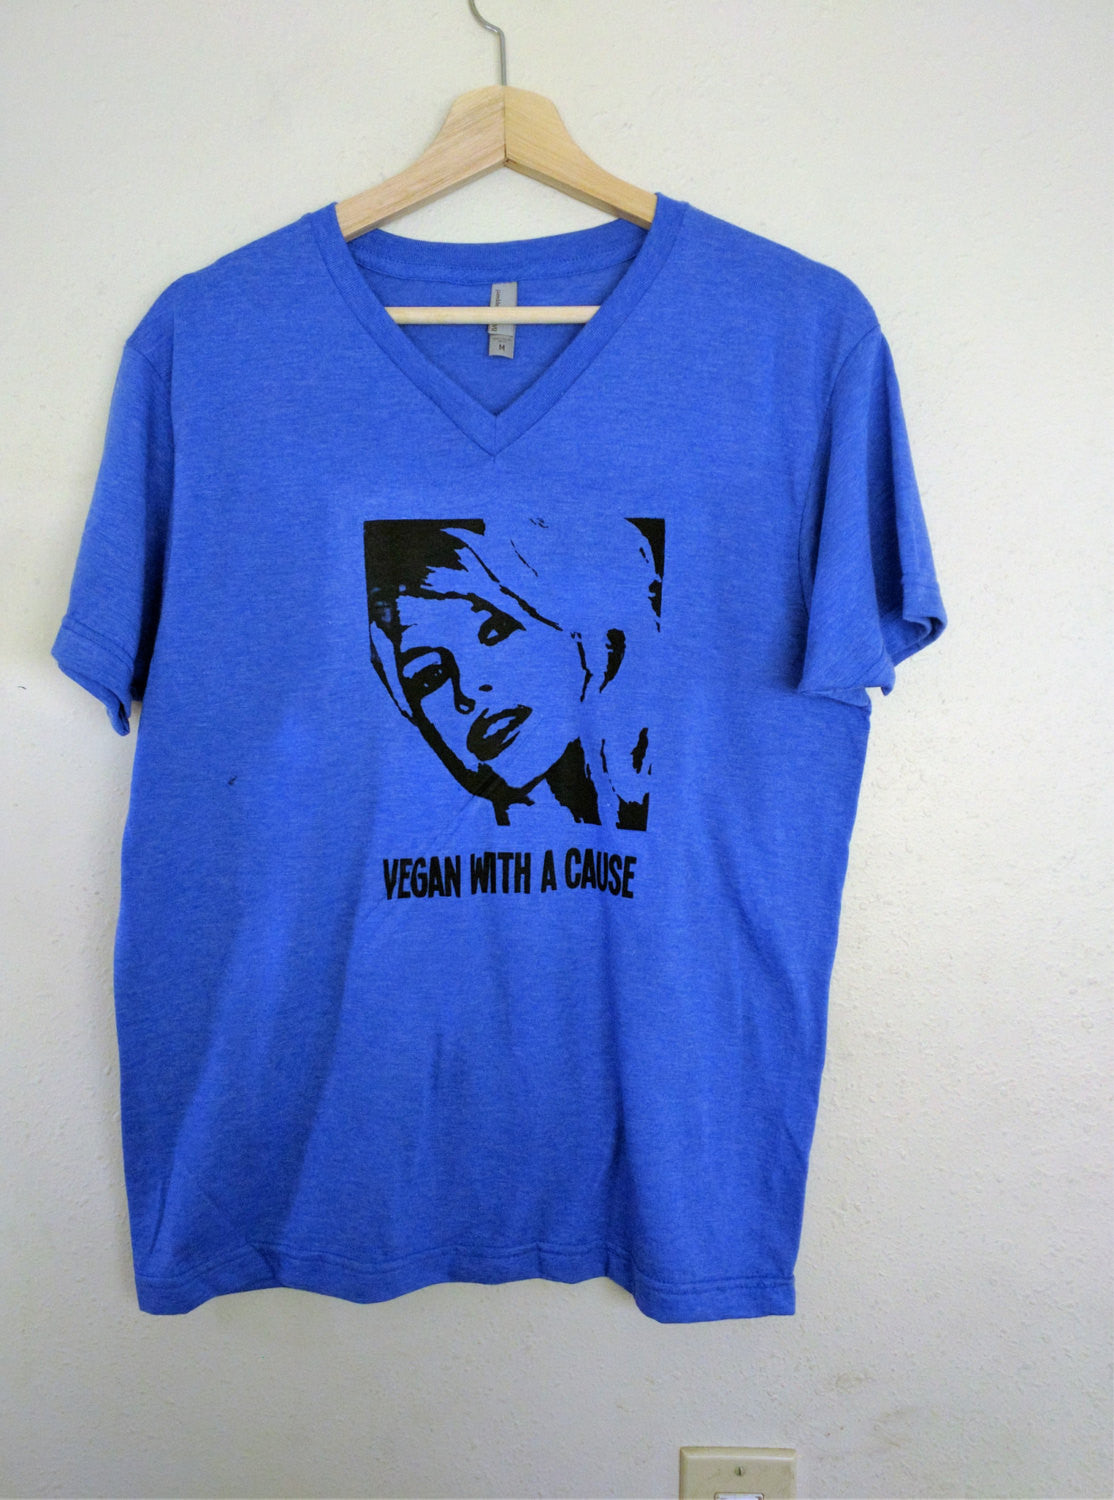 Vegan with a Cause T-shirt feat. Brigitte Bardot Bebe